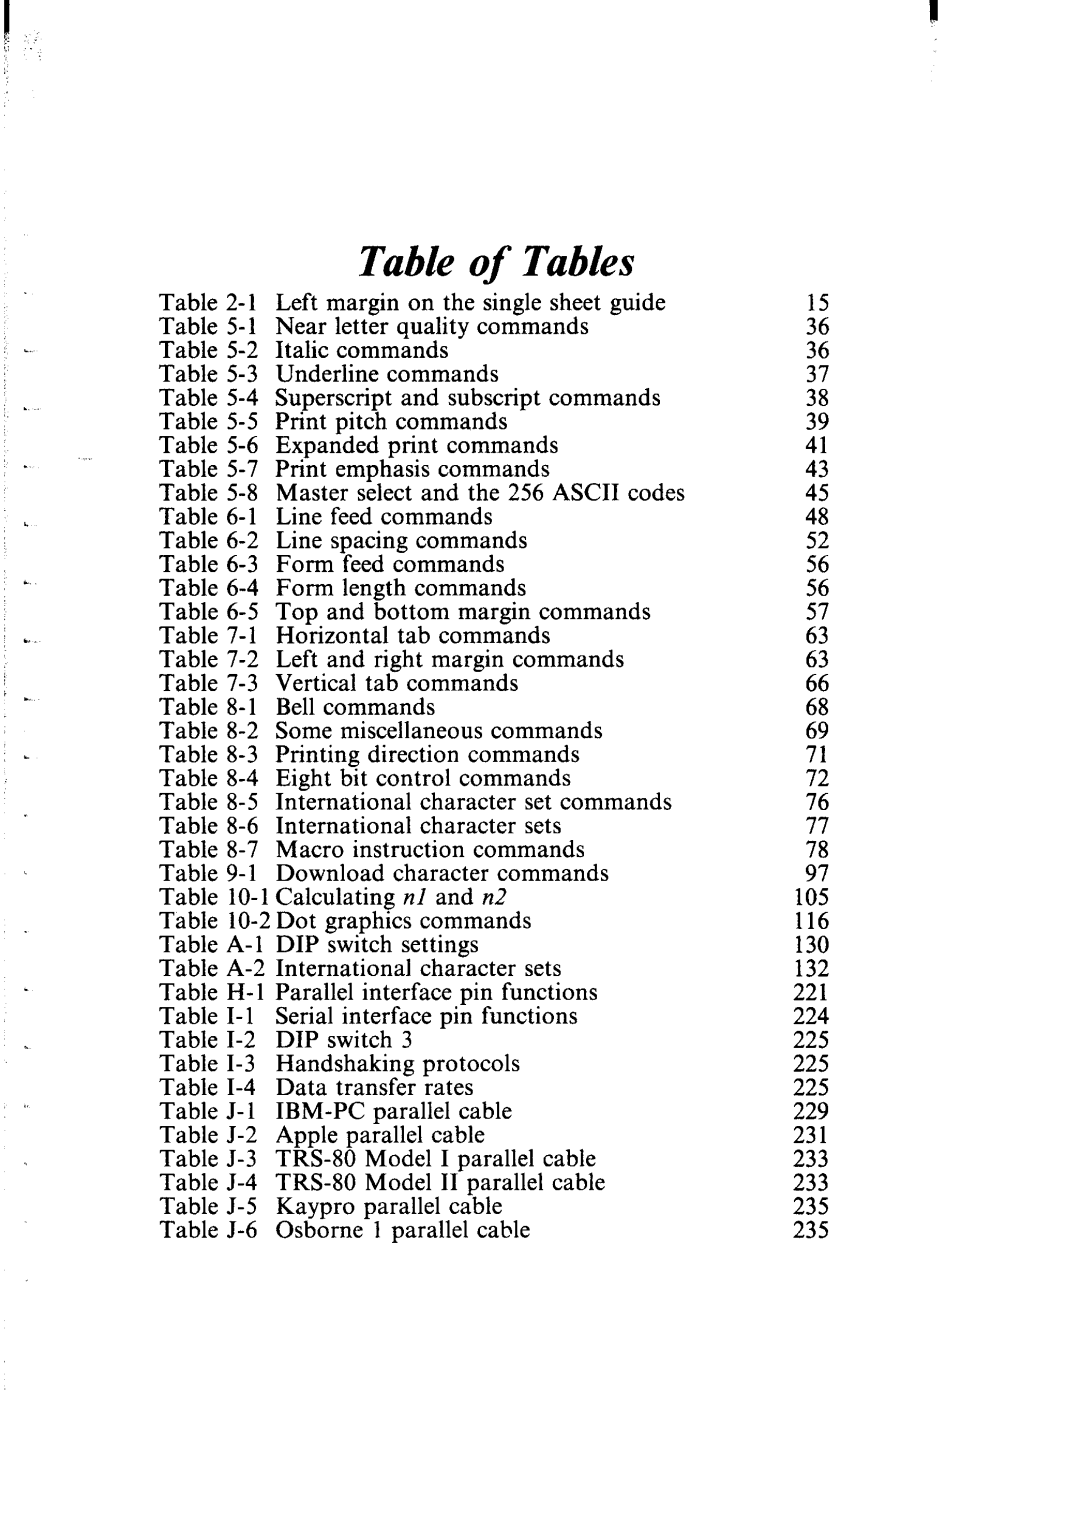 Star Micronics SR-10/I5 user manual Table of Tables 